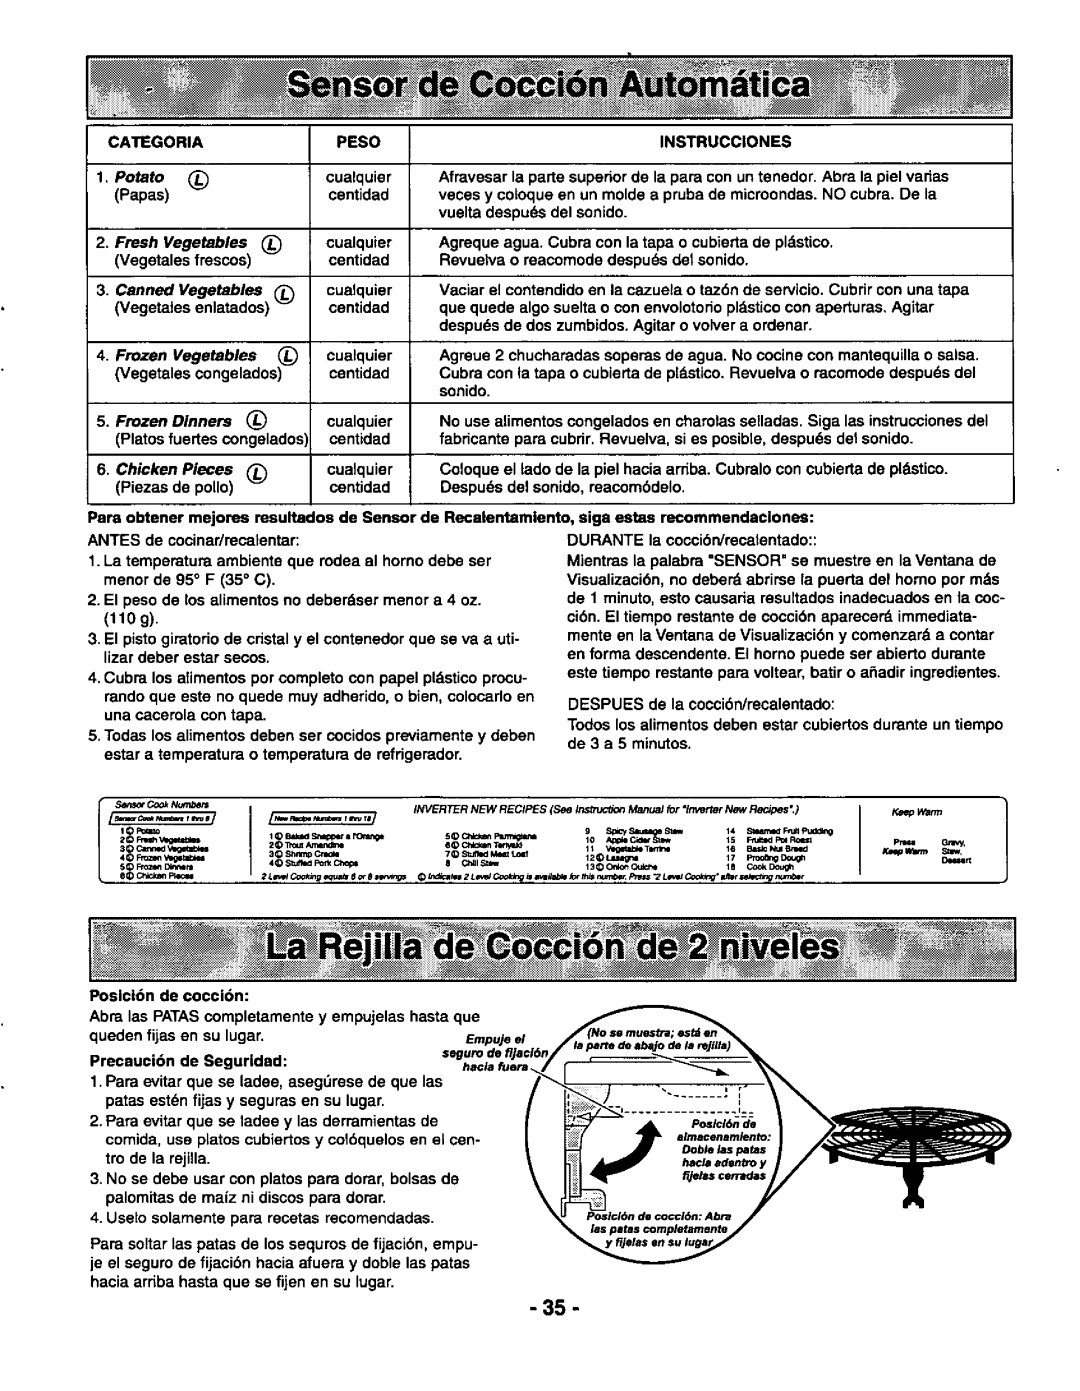 Panasonic NN-S989, NN-S789 manual 